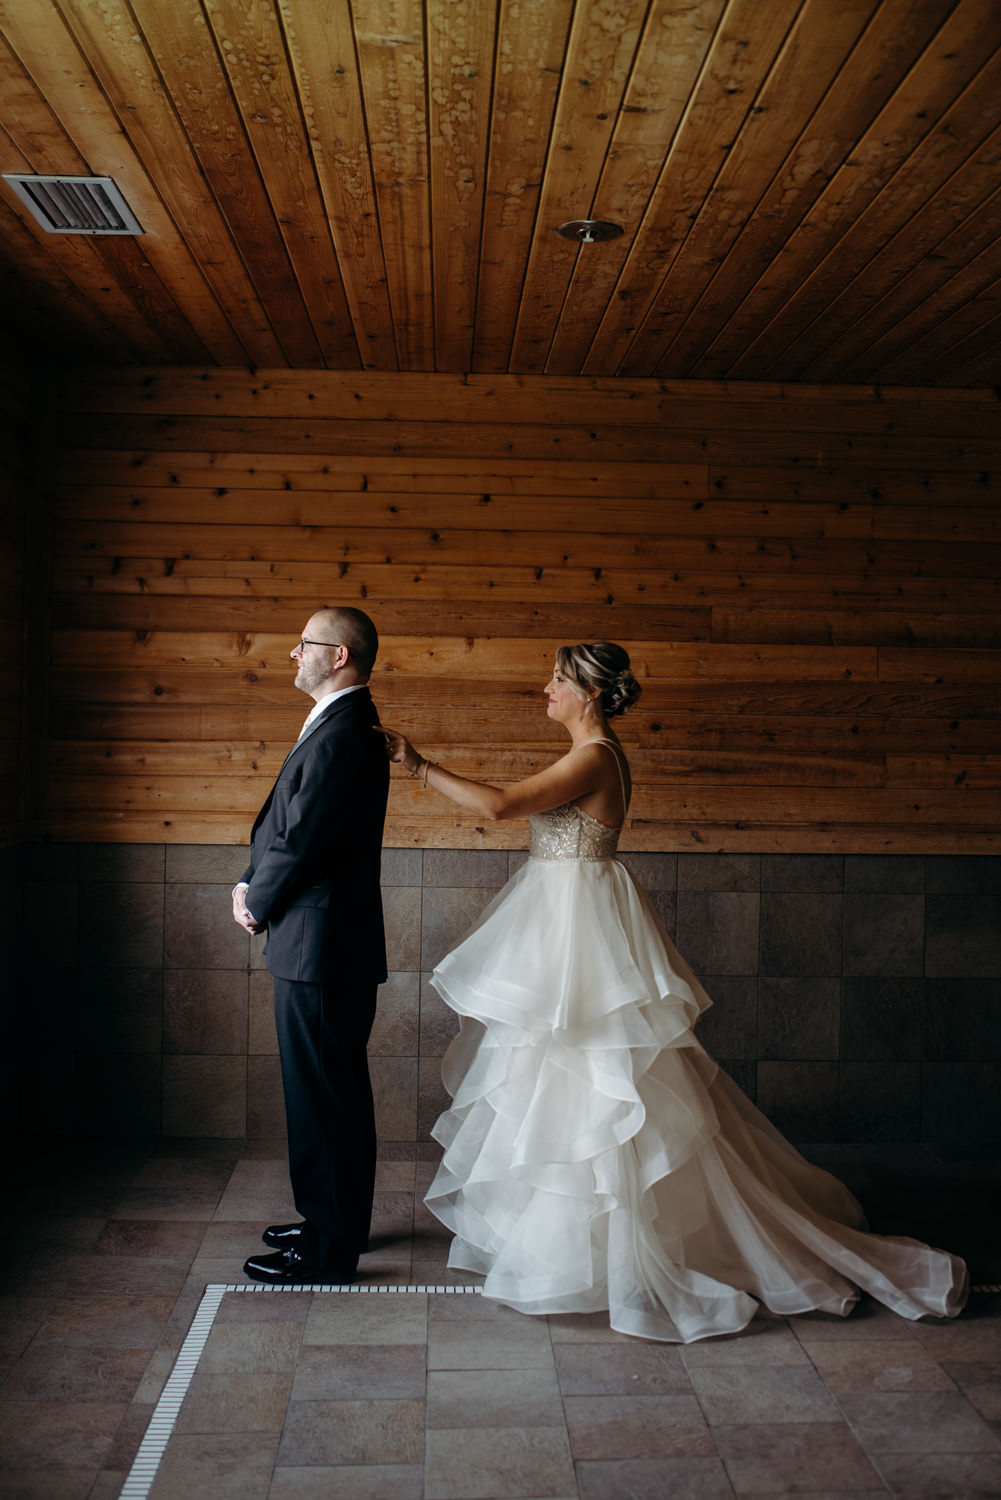 Grant Beachy wedding portrait commercial photographer goshen elkhart south bend warsaw-2643.jpg